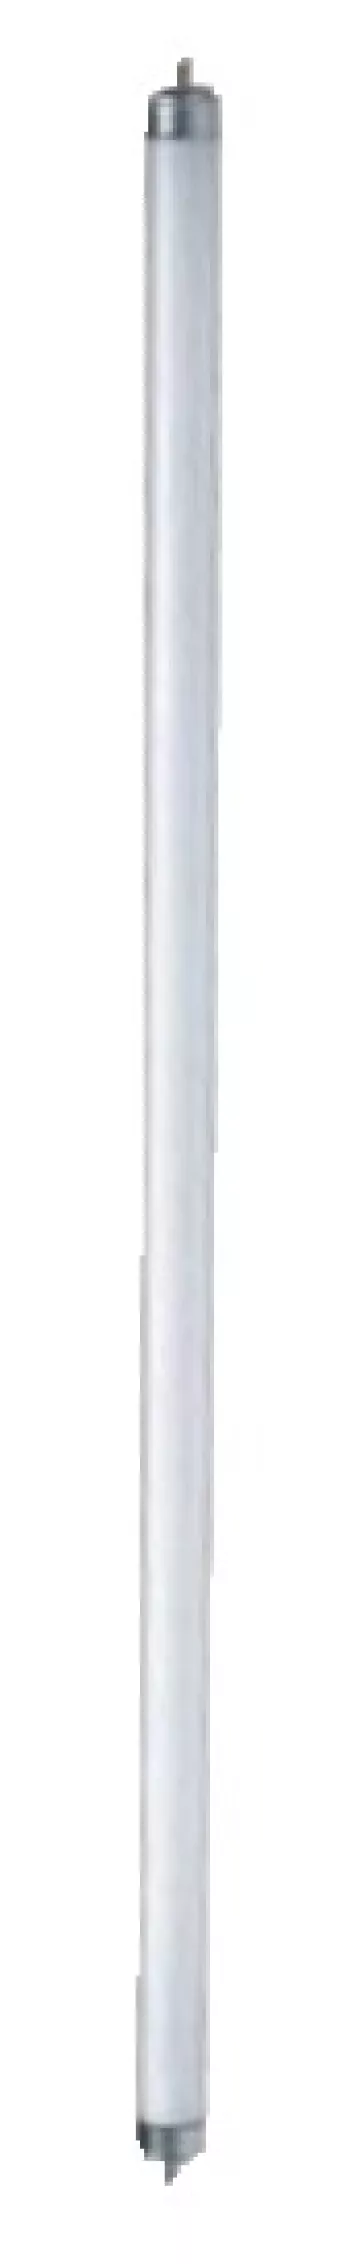 Marbel Лампа T8, G13, 230V, 18W, 3000К,  энергосберегающая